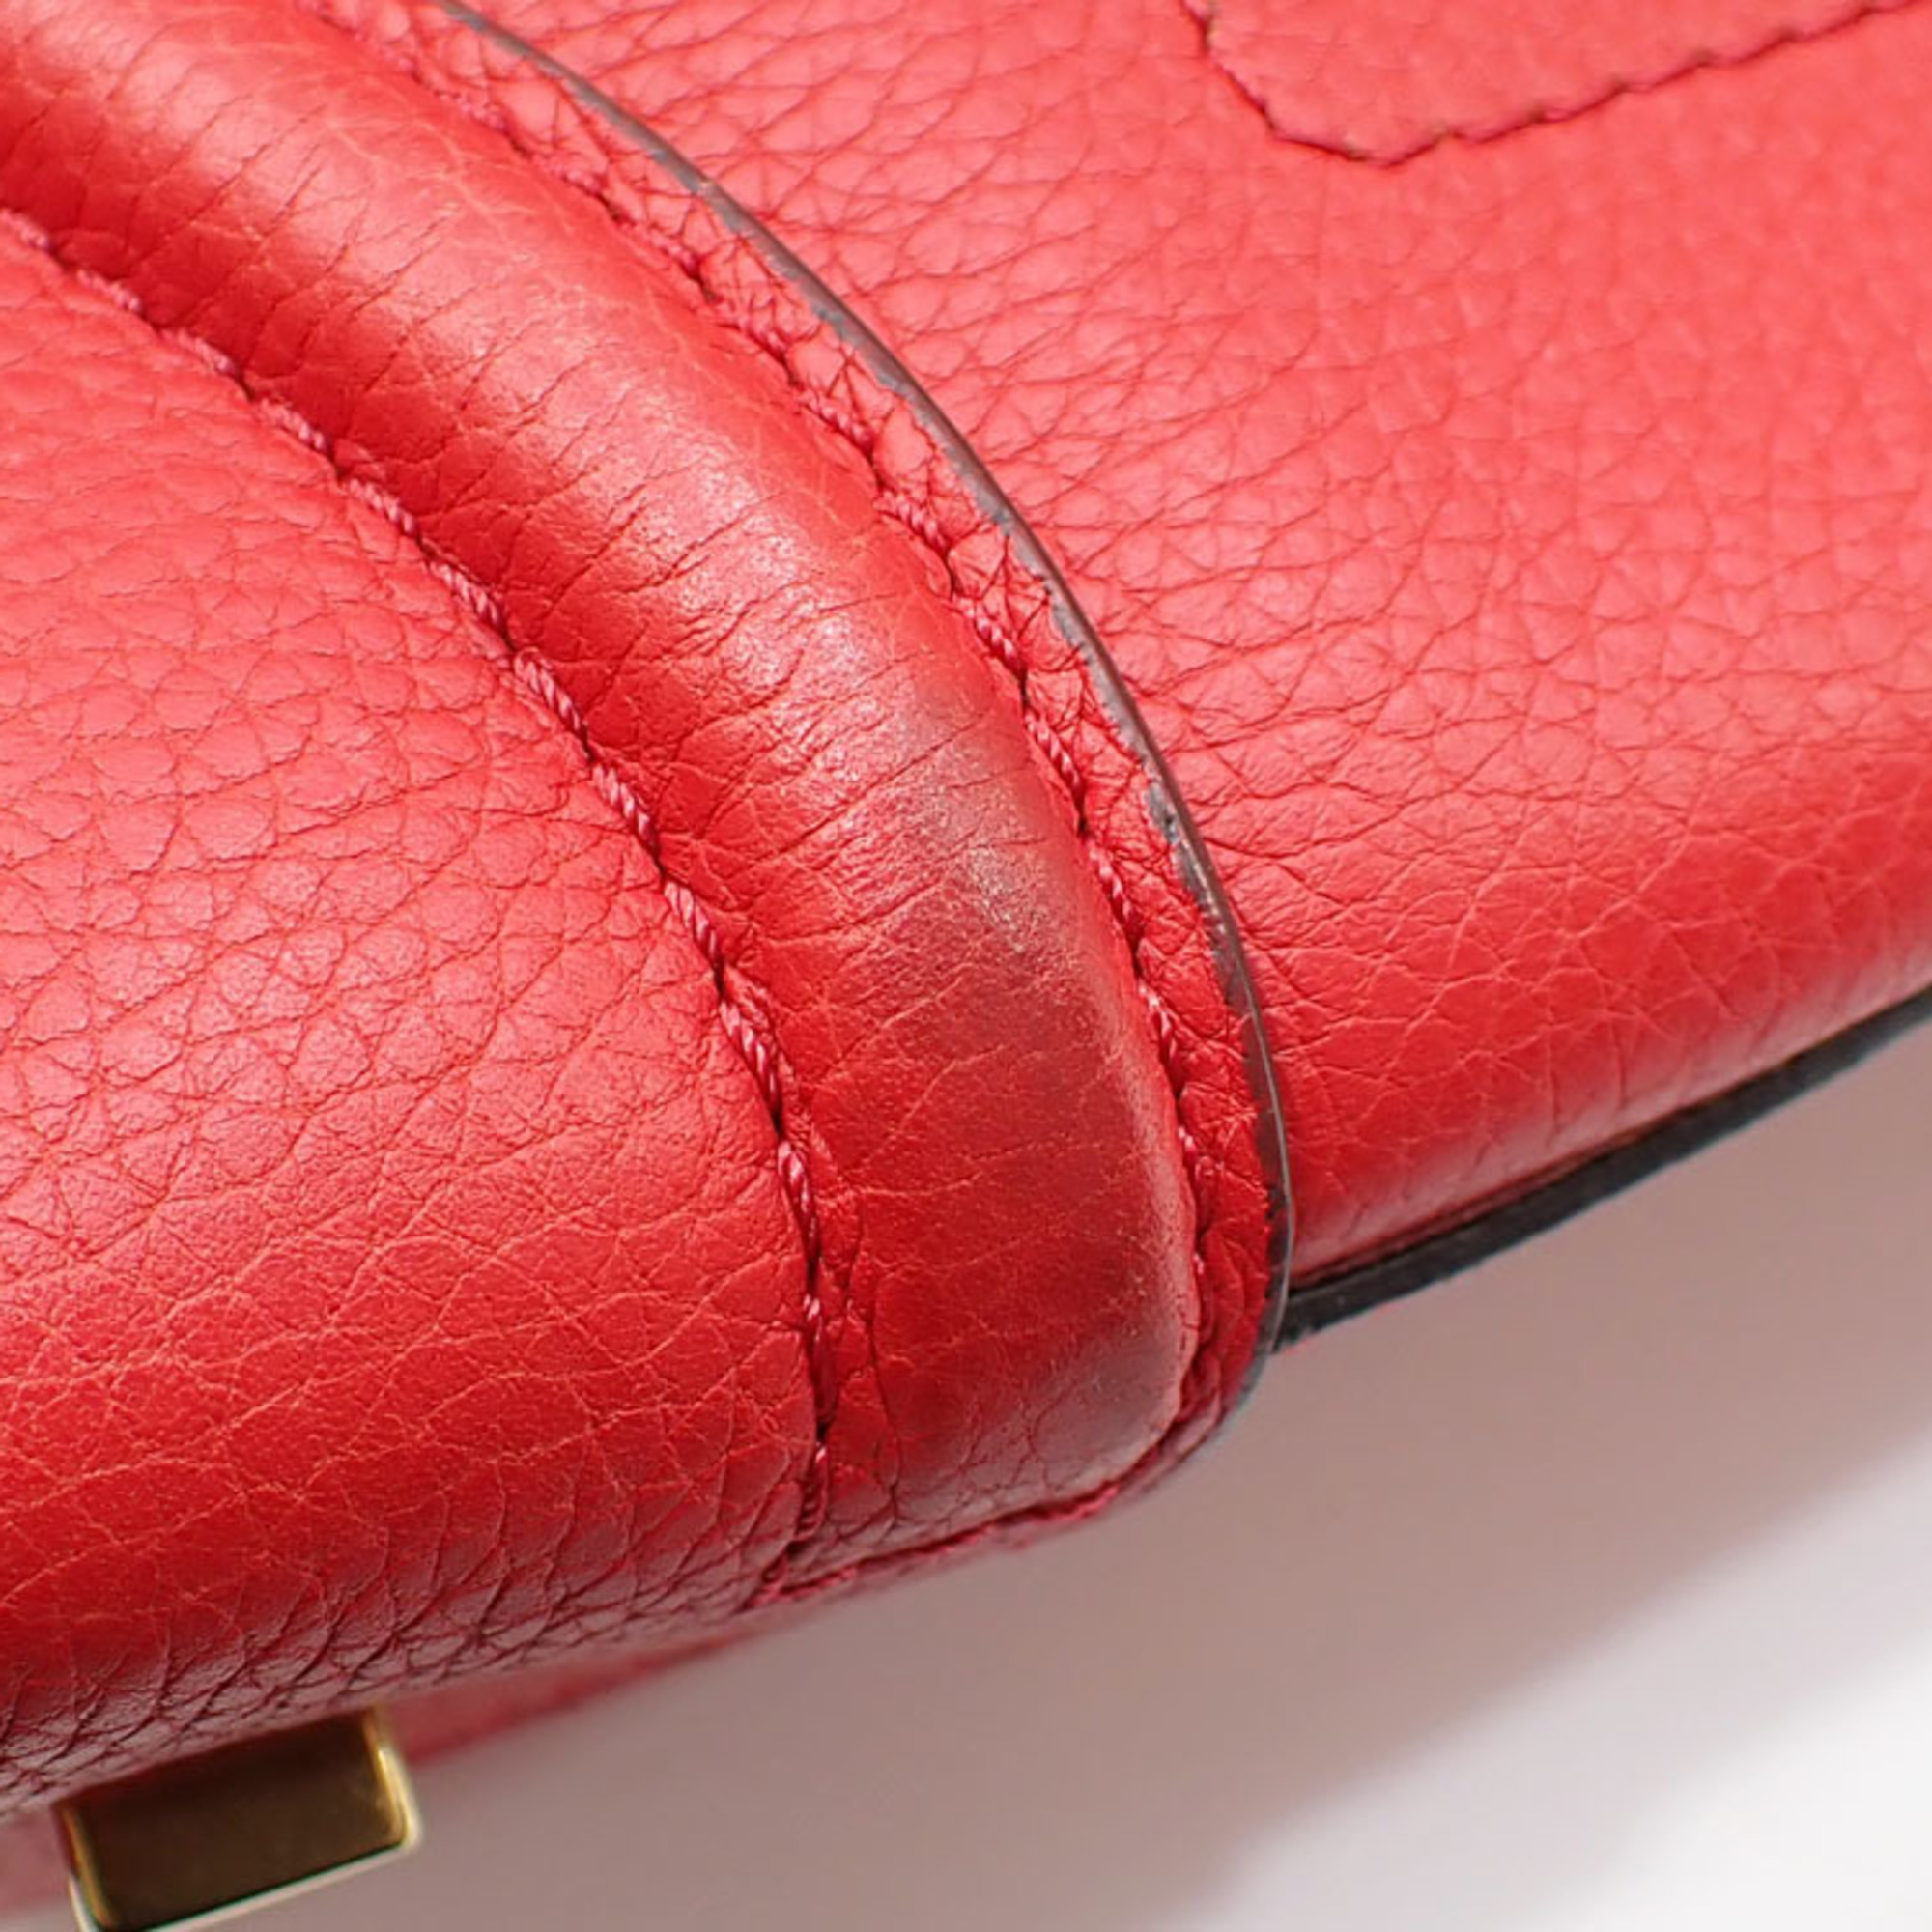 Celine Handbag Luggage Shopper Women's Red Leather 165213